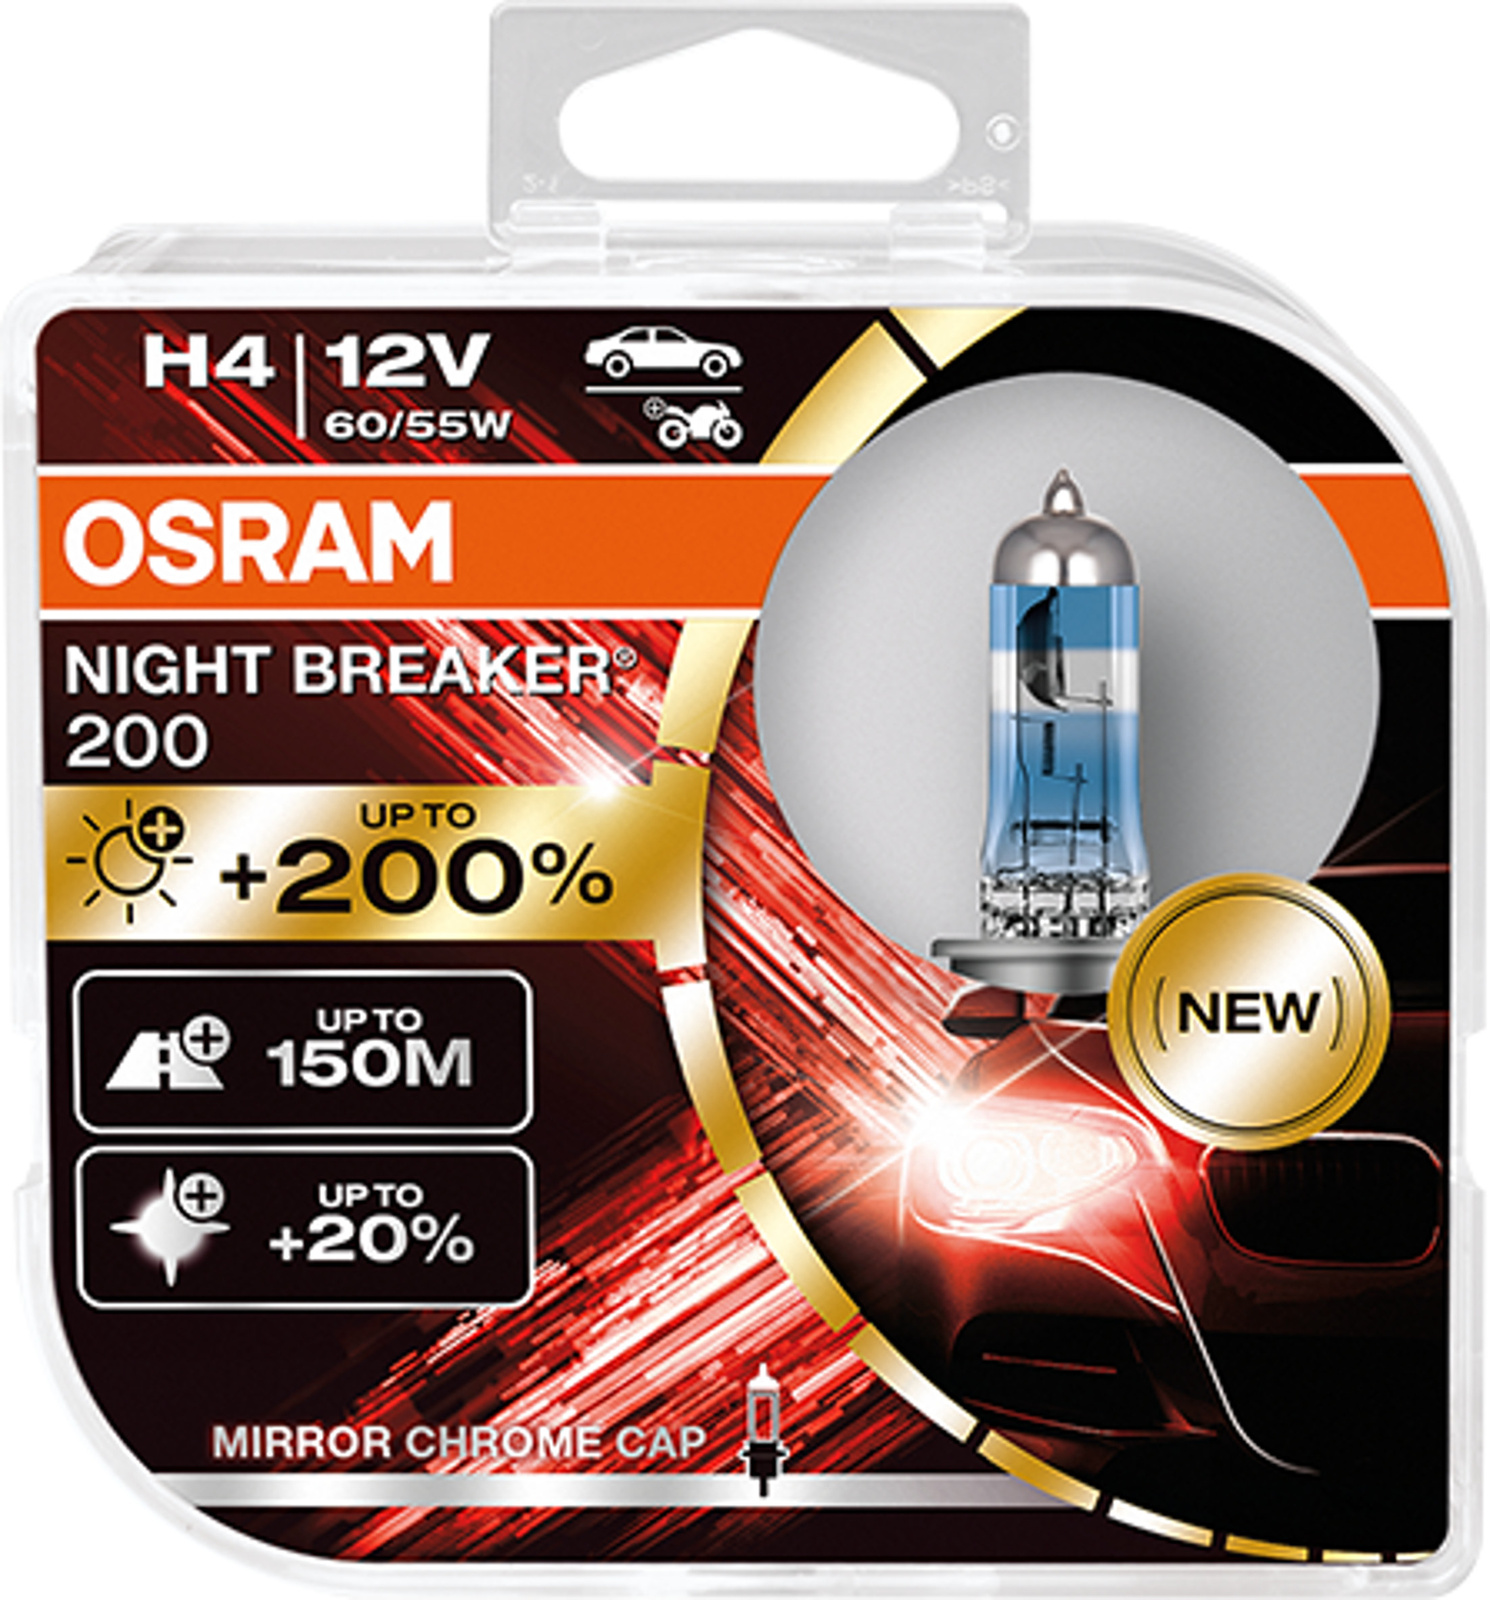 OSRAM H4 12V NIGHT BREAKER 200